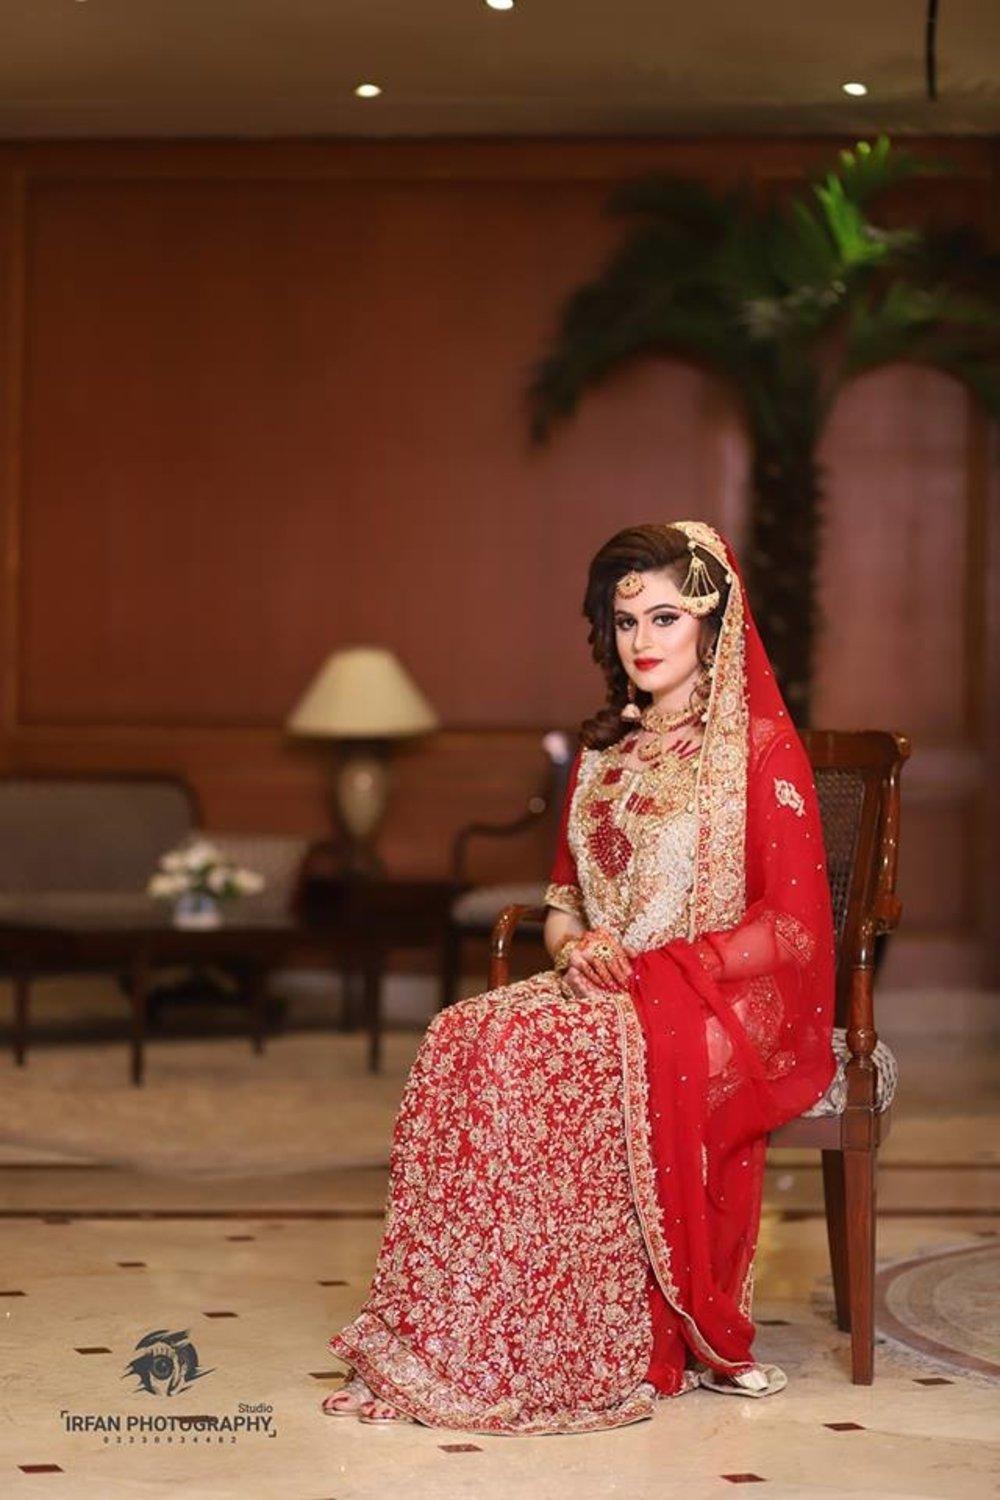 Pakistani Bride Wazhma Awan's Bridal Attire - Shaadiwish